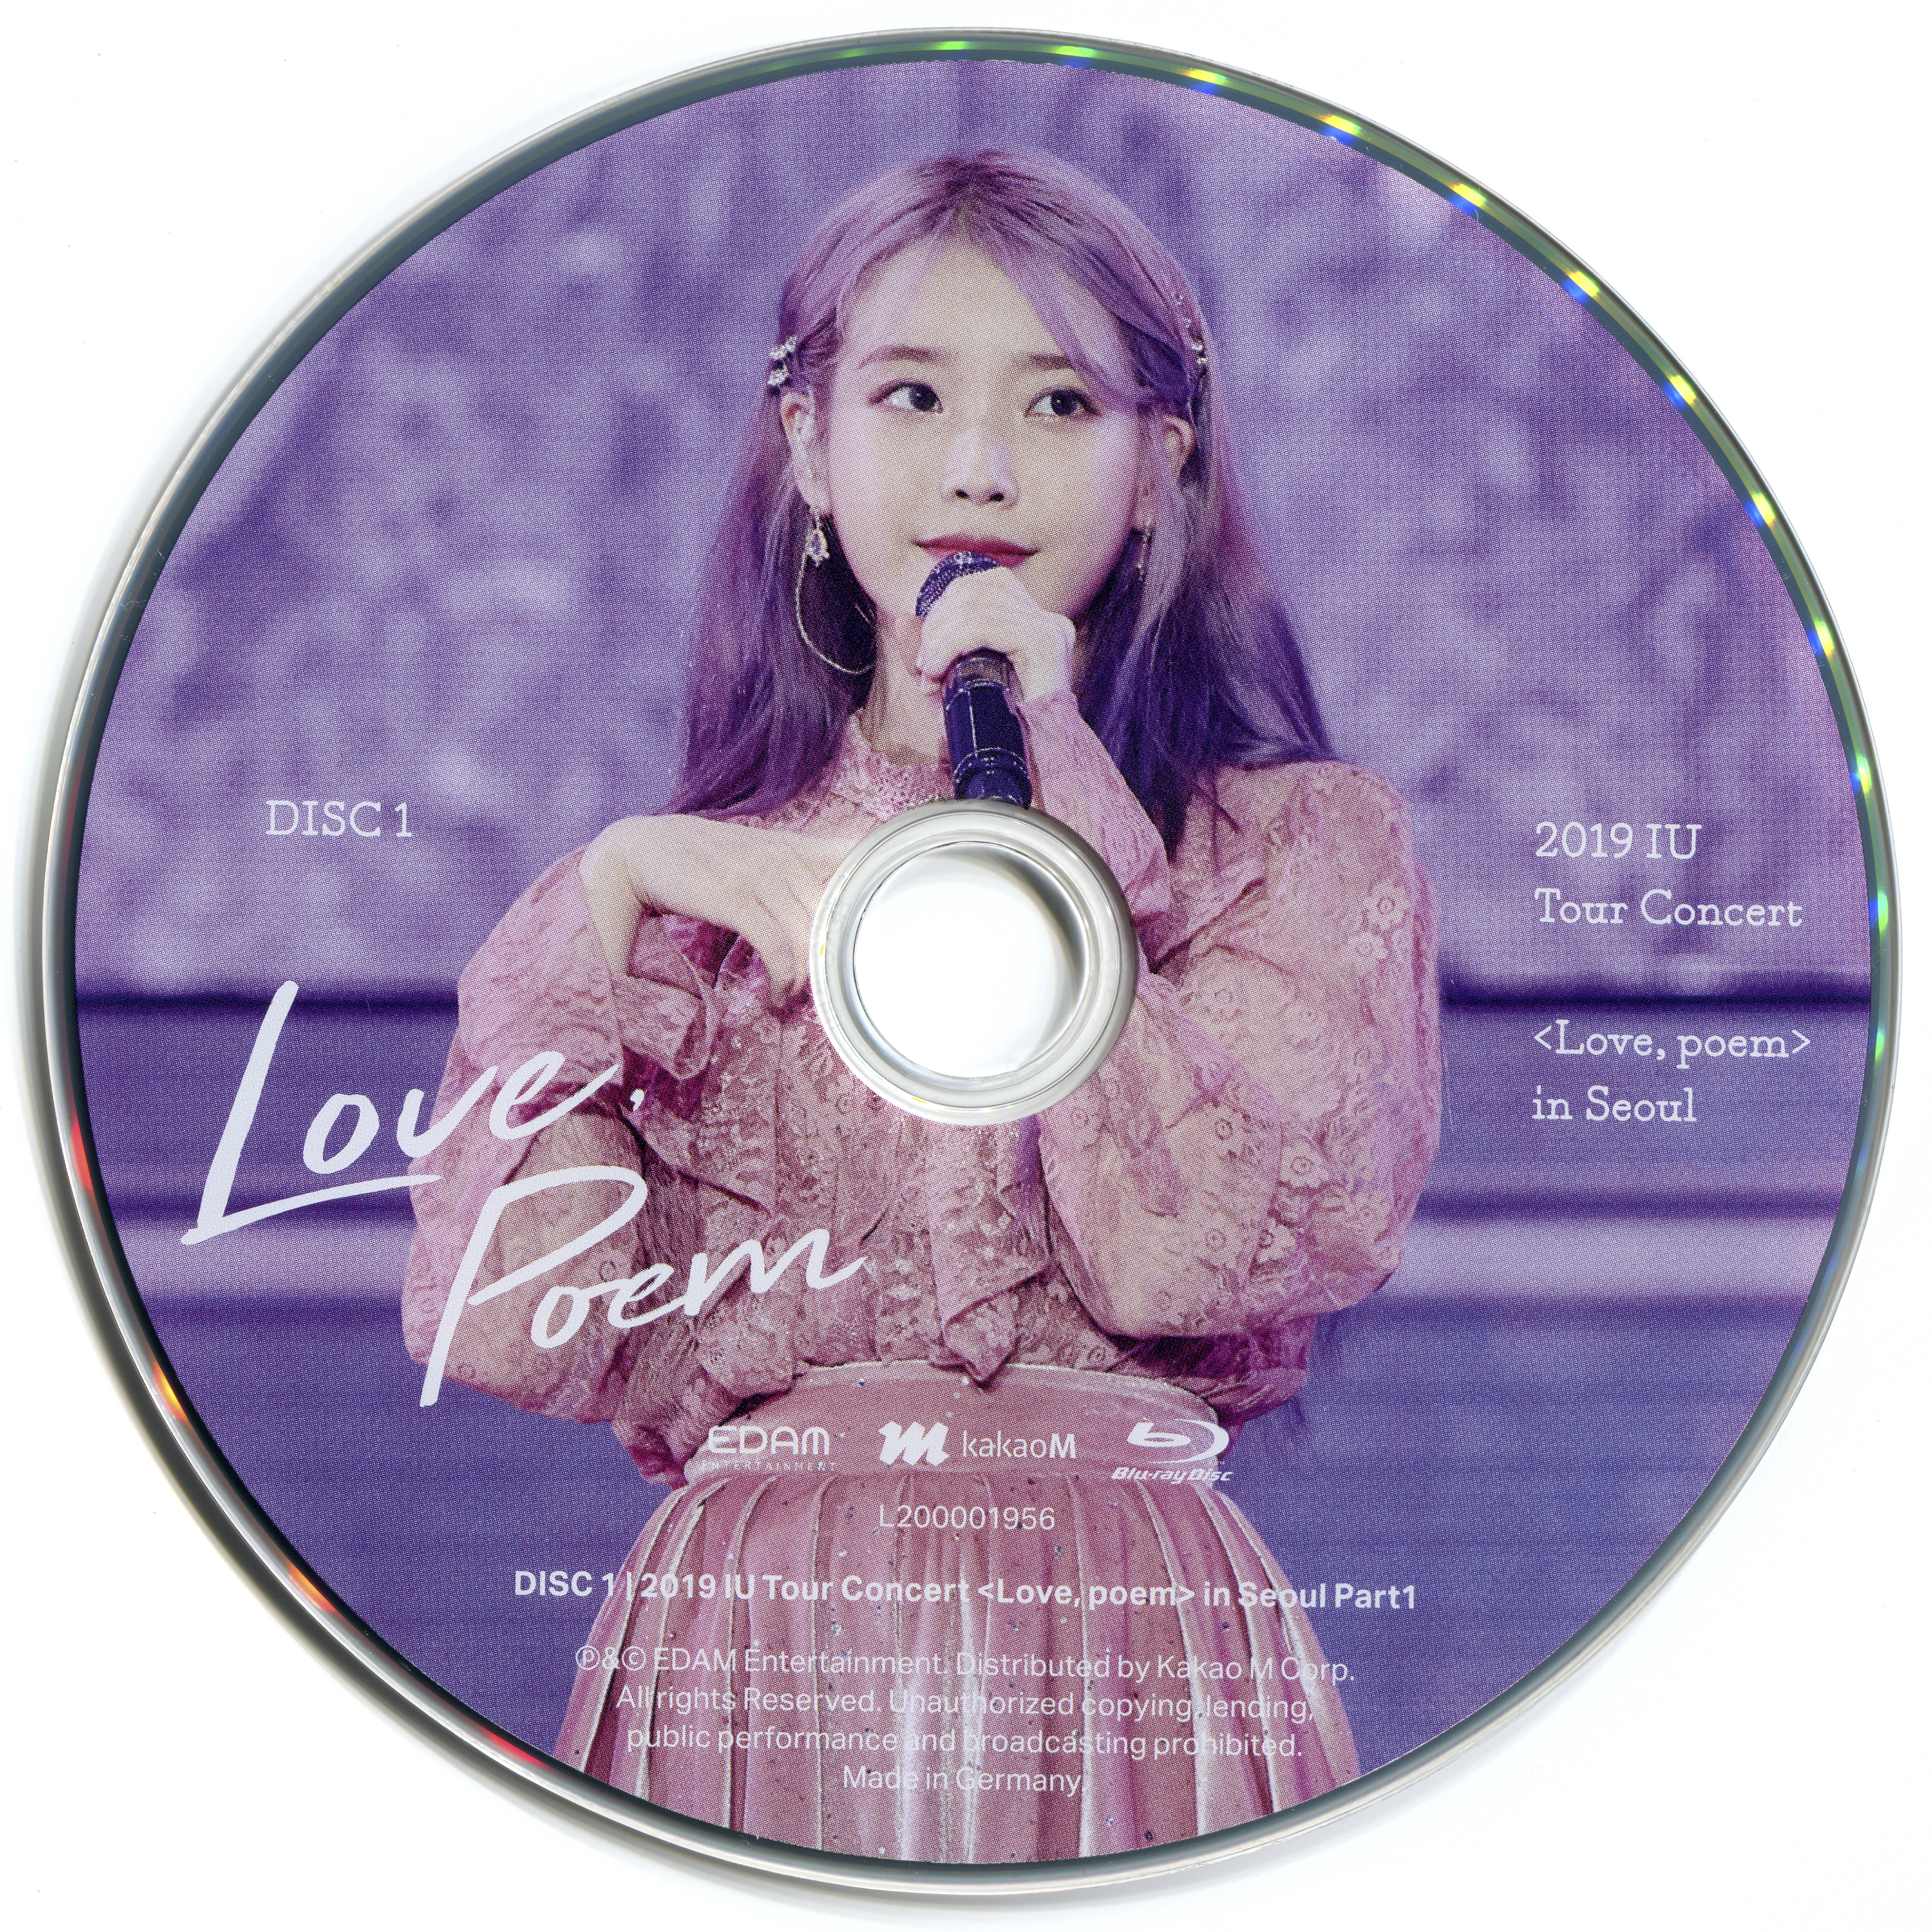 2019 IU Tour Concert <Love, poem> in Seoul DVD / Blu-ray